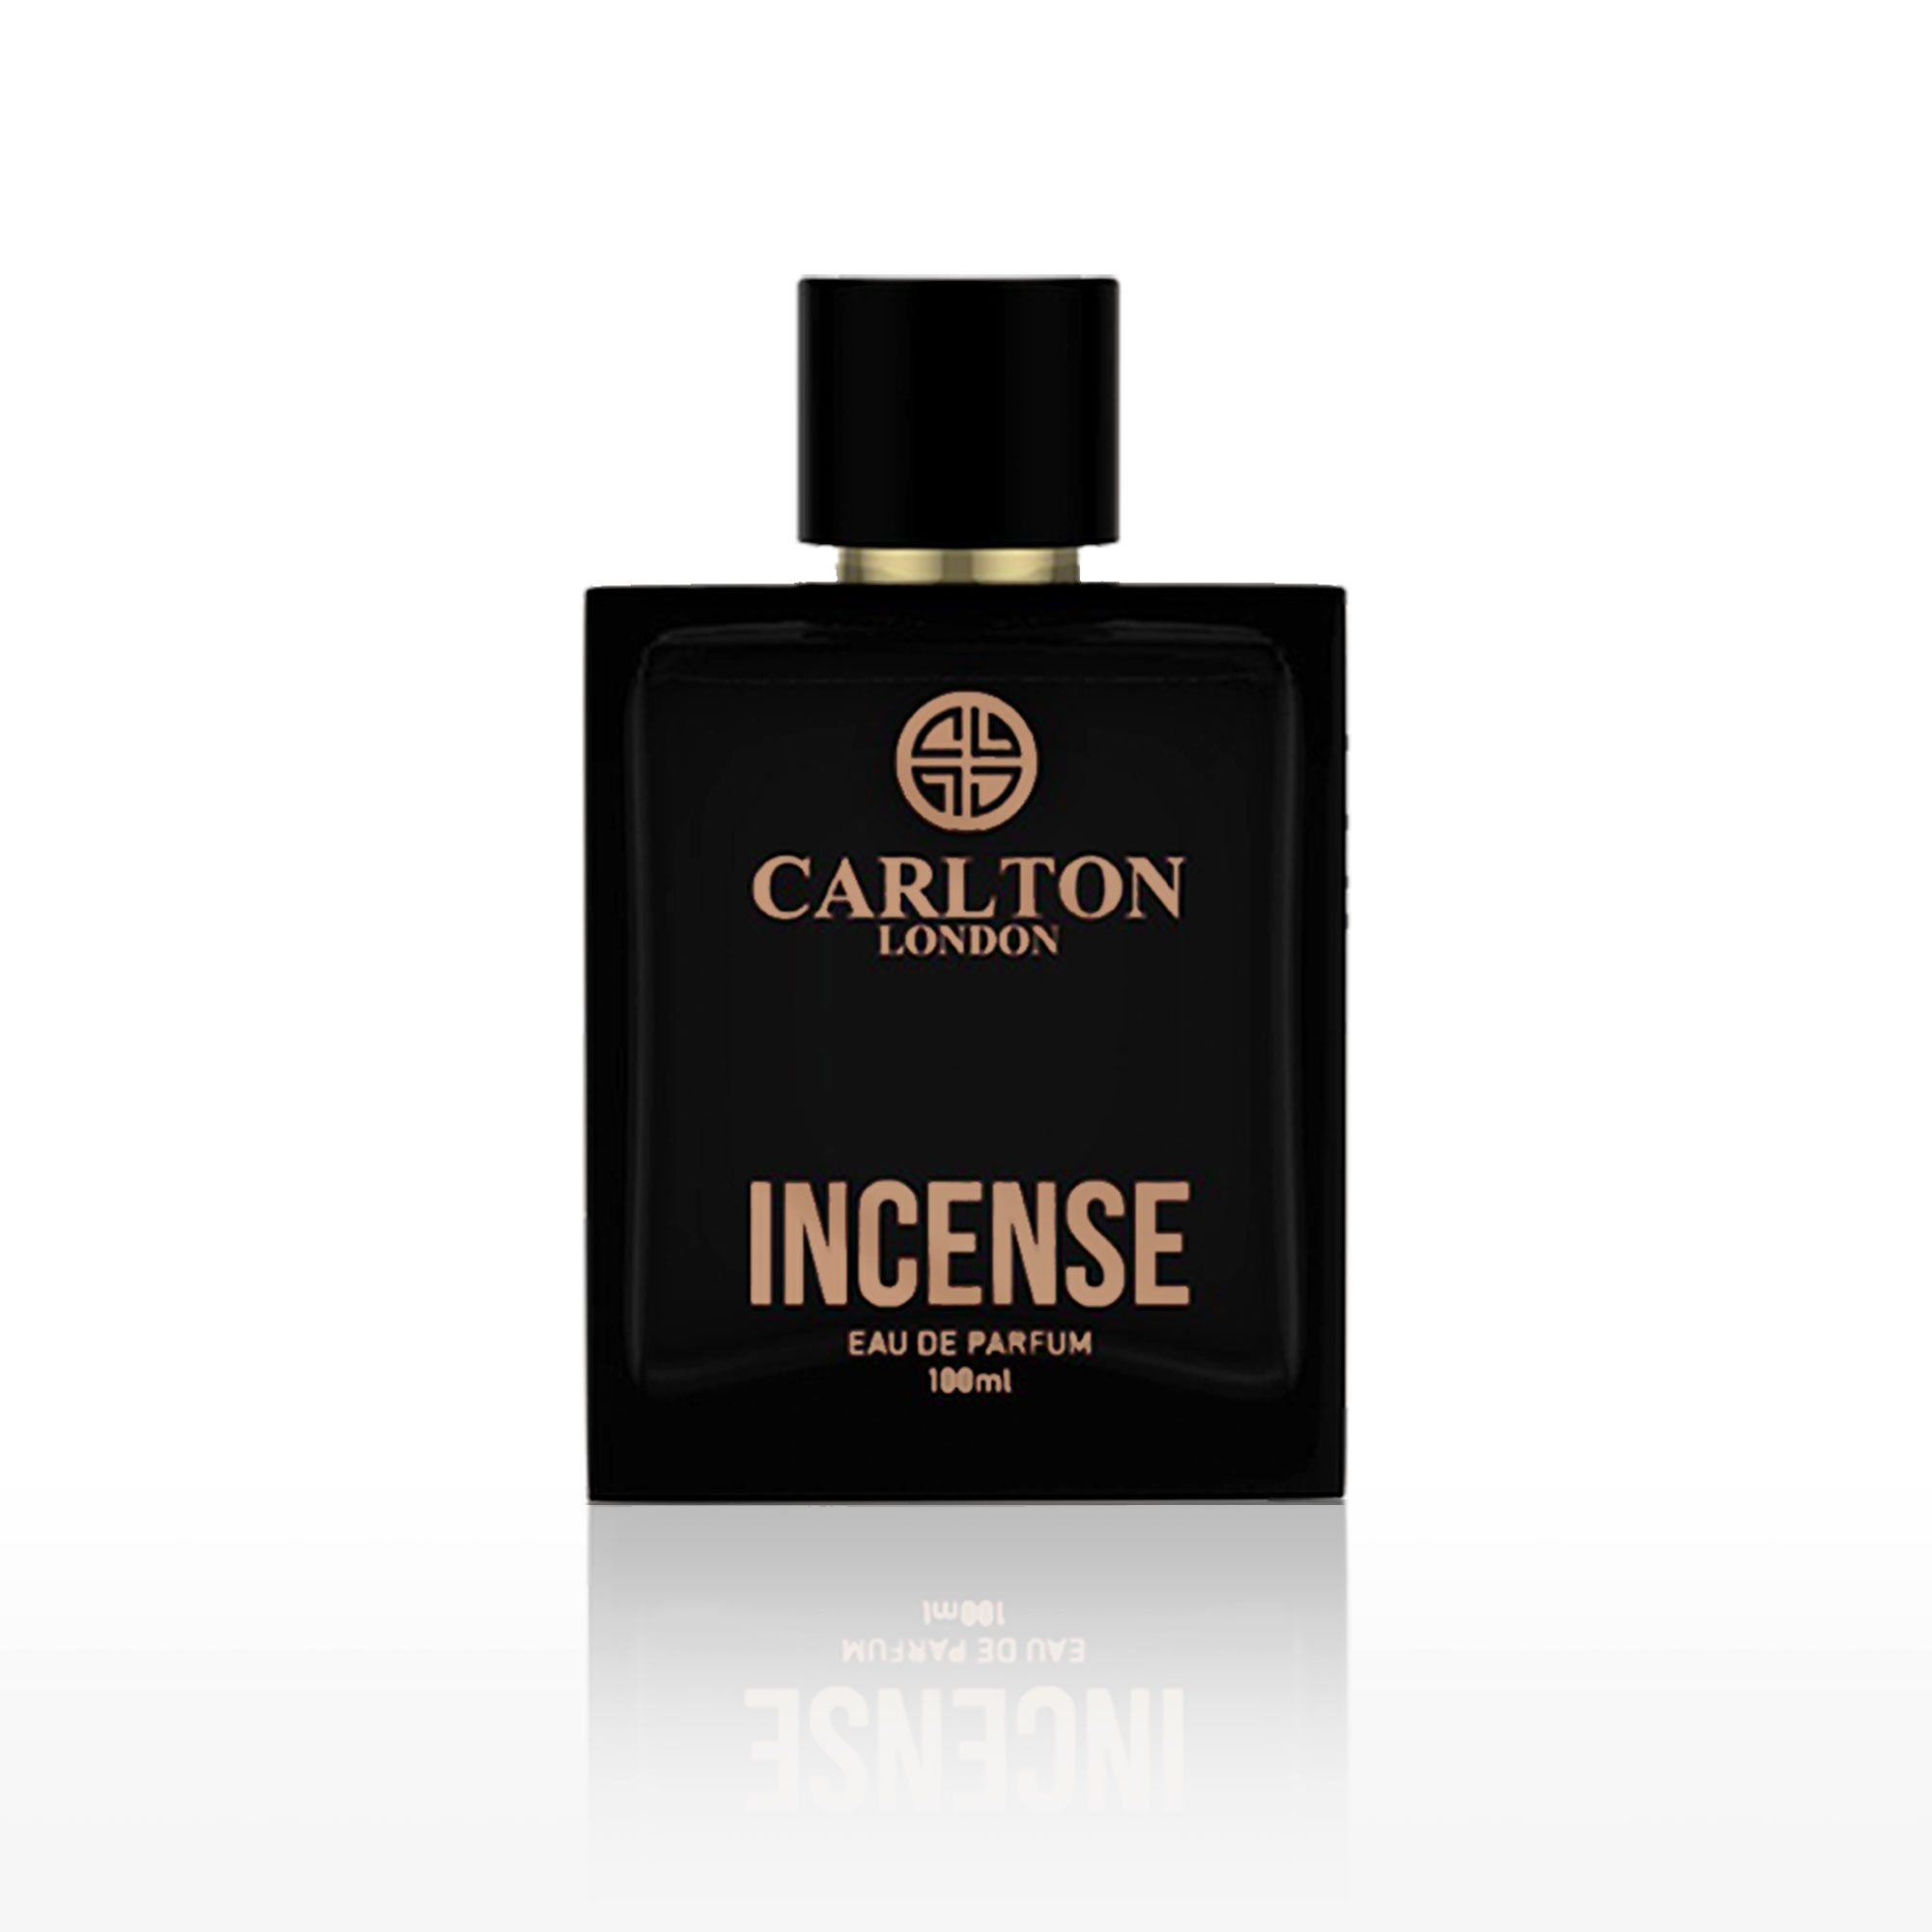 Carlton London Perfume Limited Edition Incense Perfume for Men